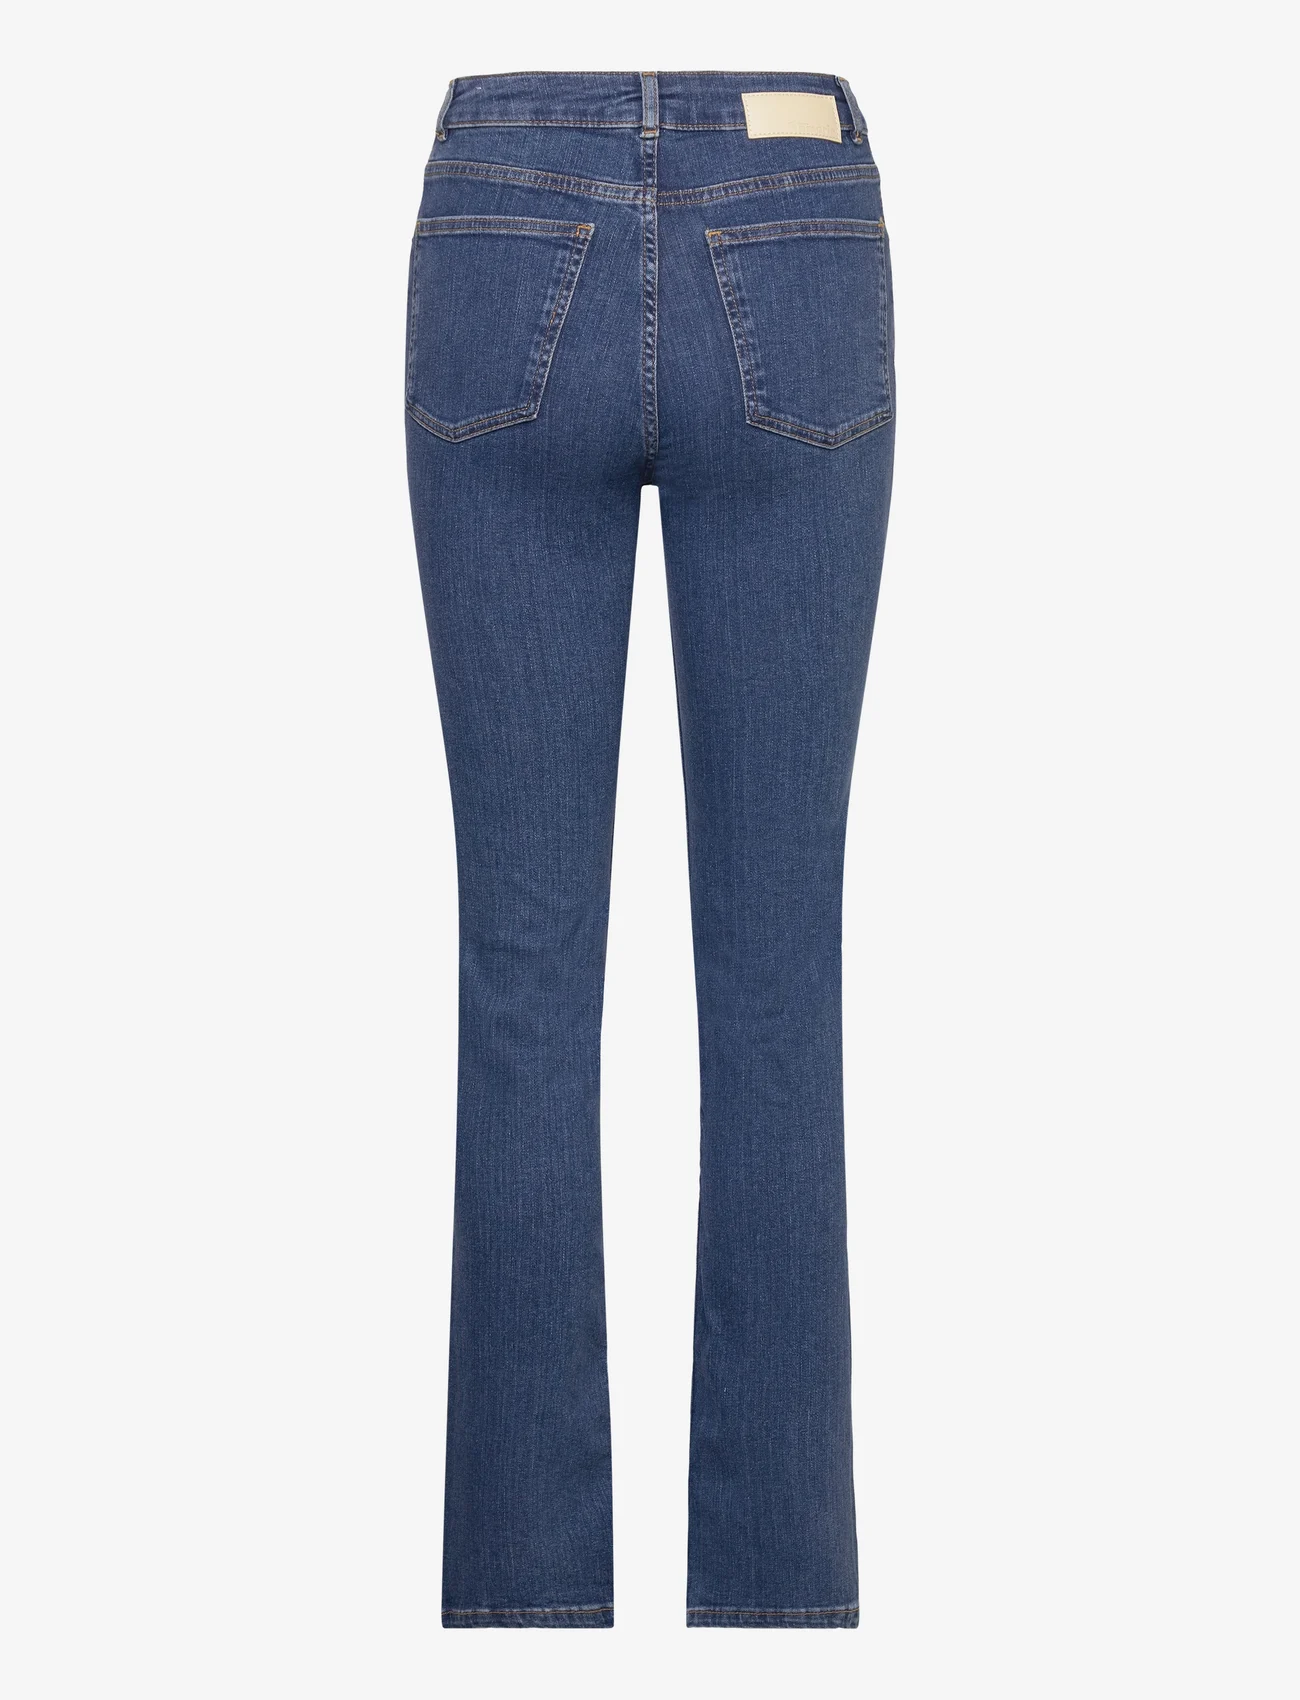 Tamaris Apparel - AGBOR slim jeans - schlaghosen - mid blue denim - 1